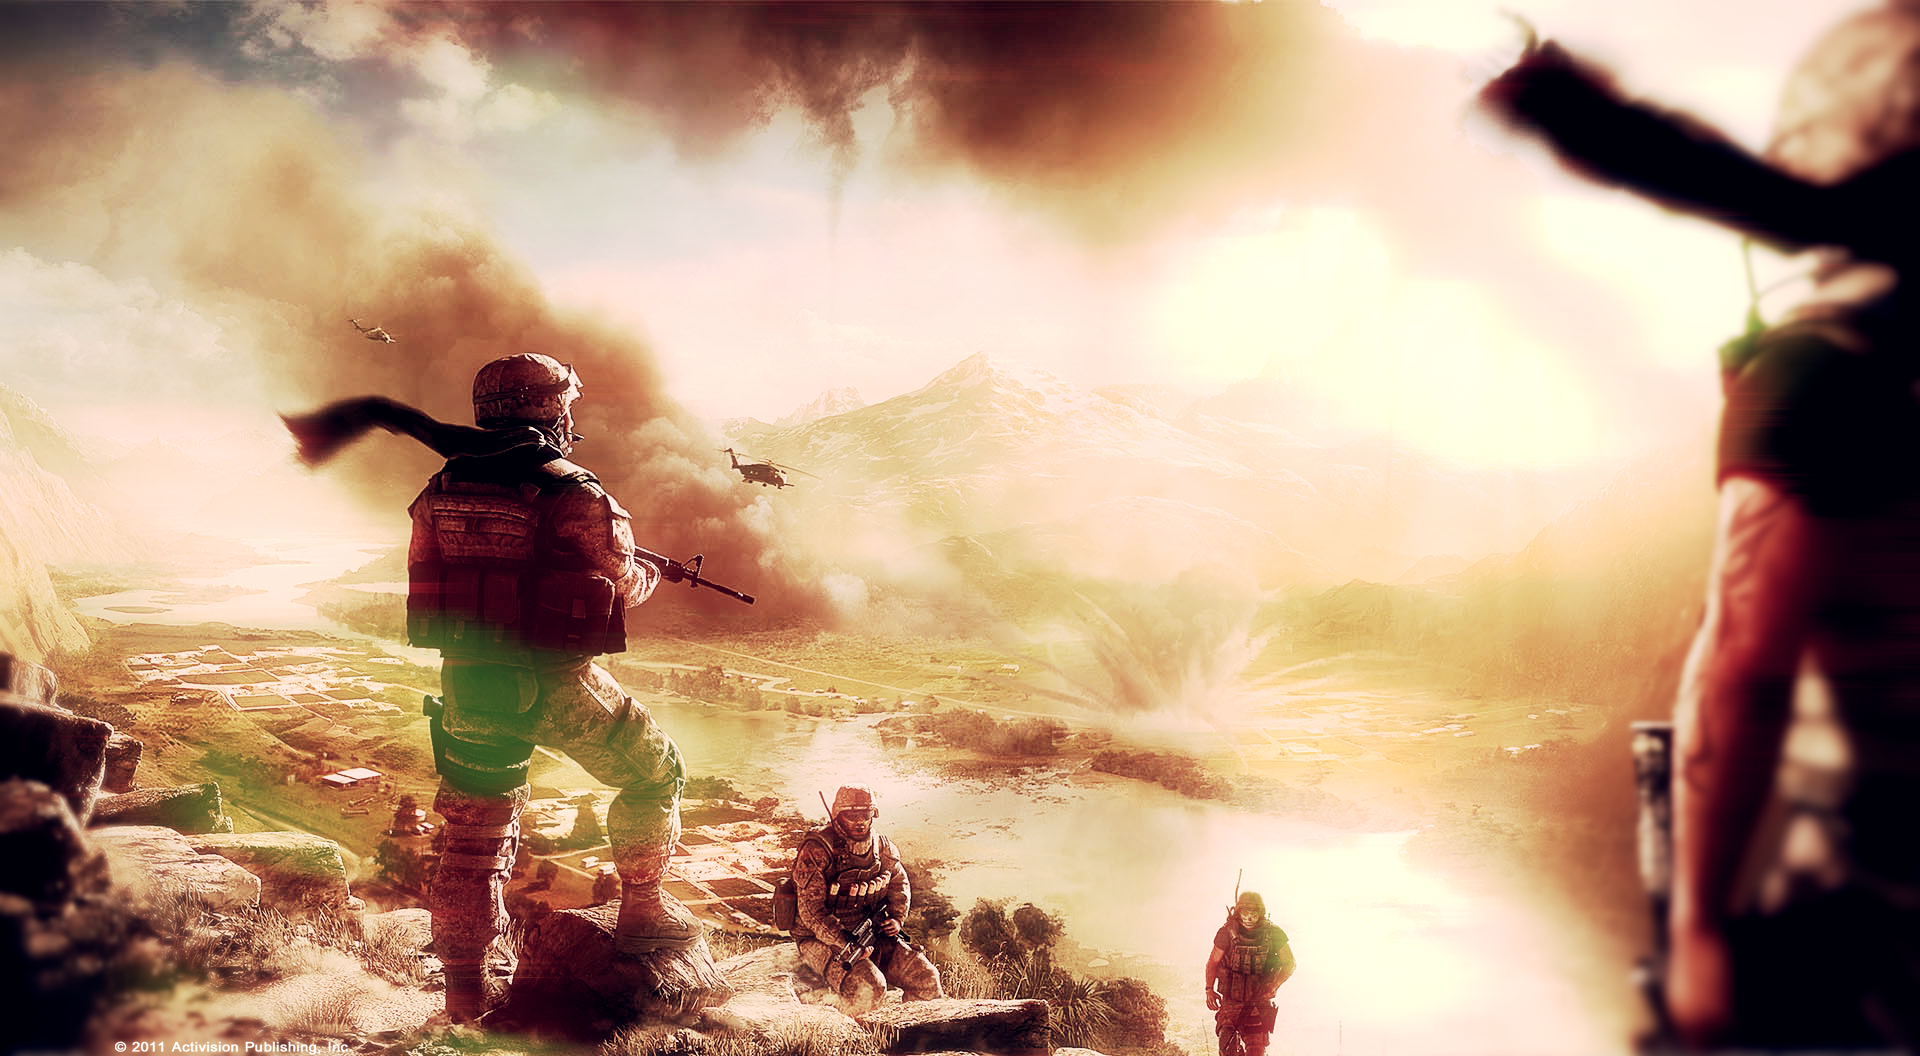 Modern Warfare 3 - Wallpaper 2 by MuuseDesign on DeviantArt